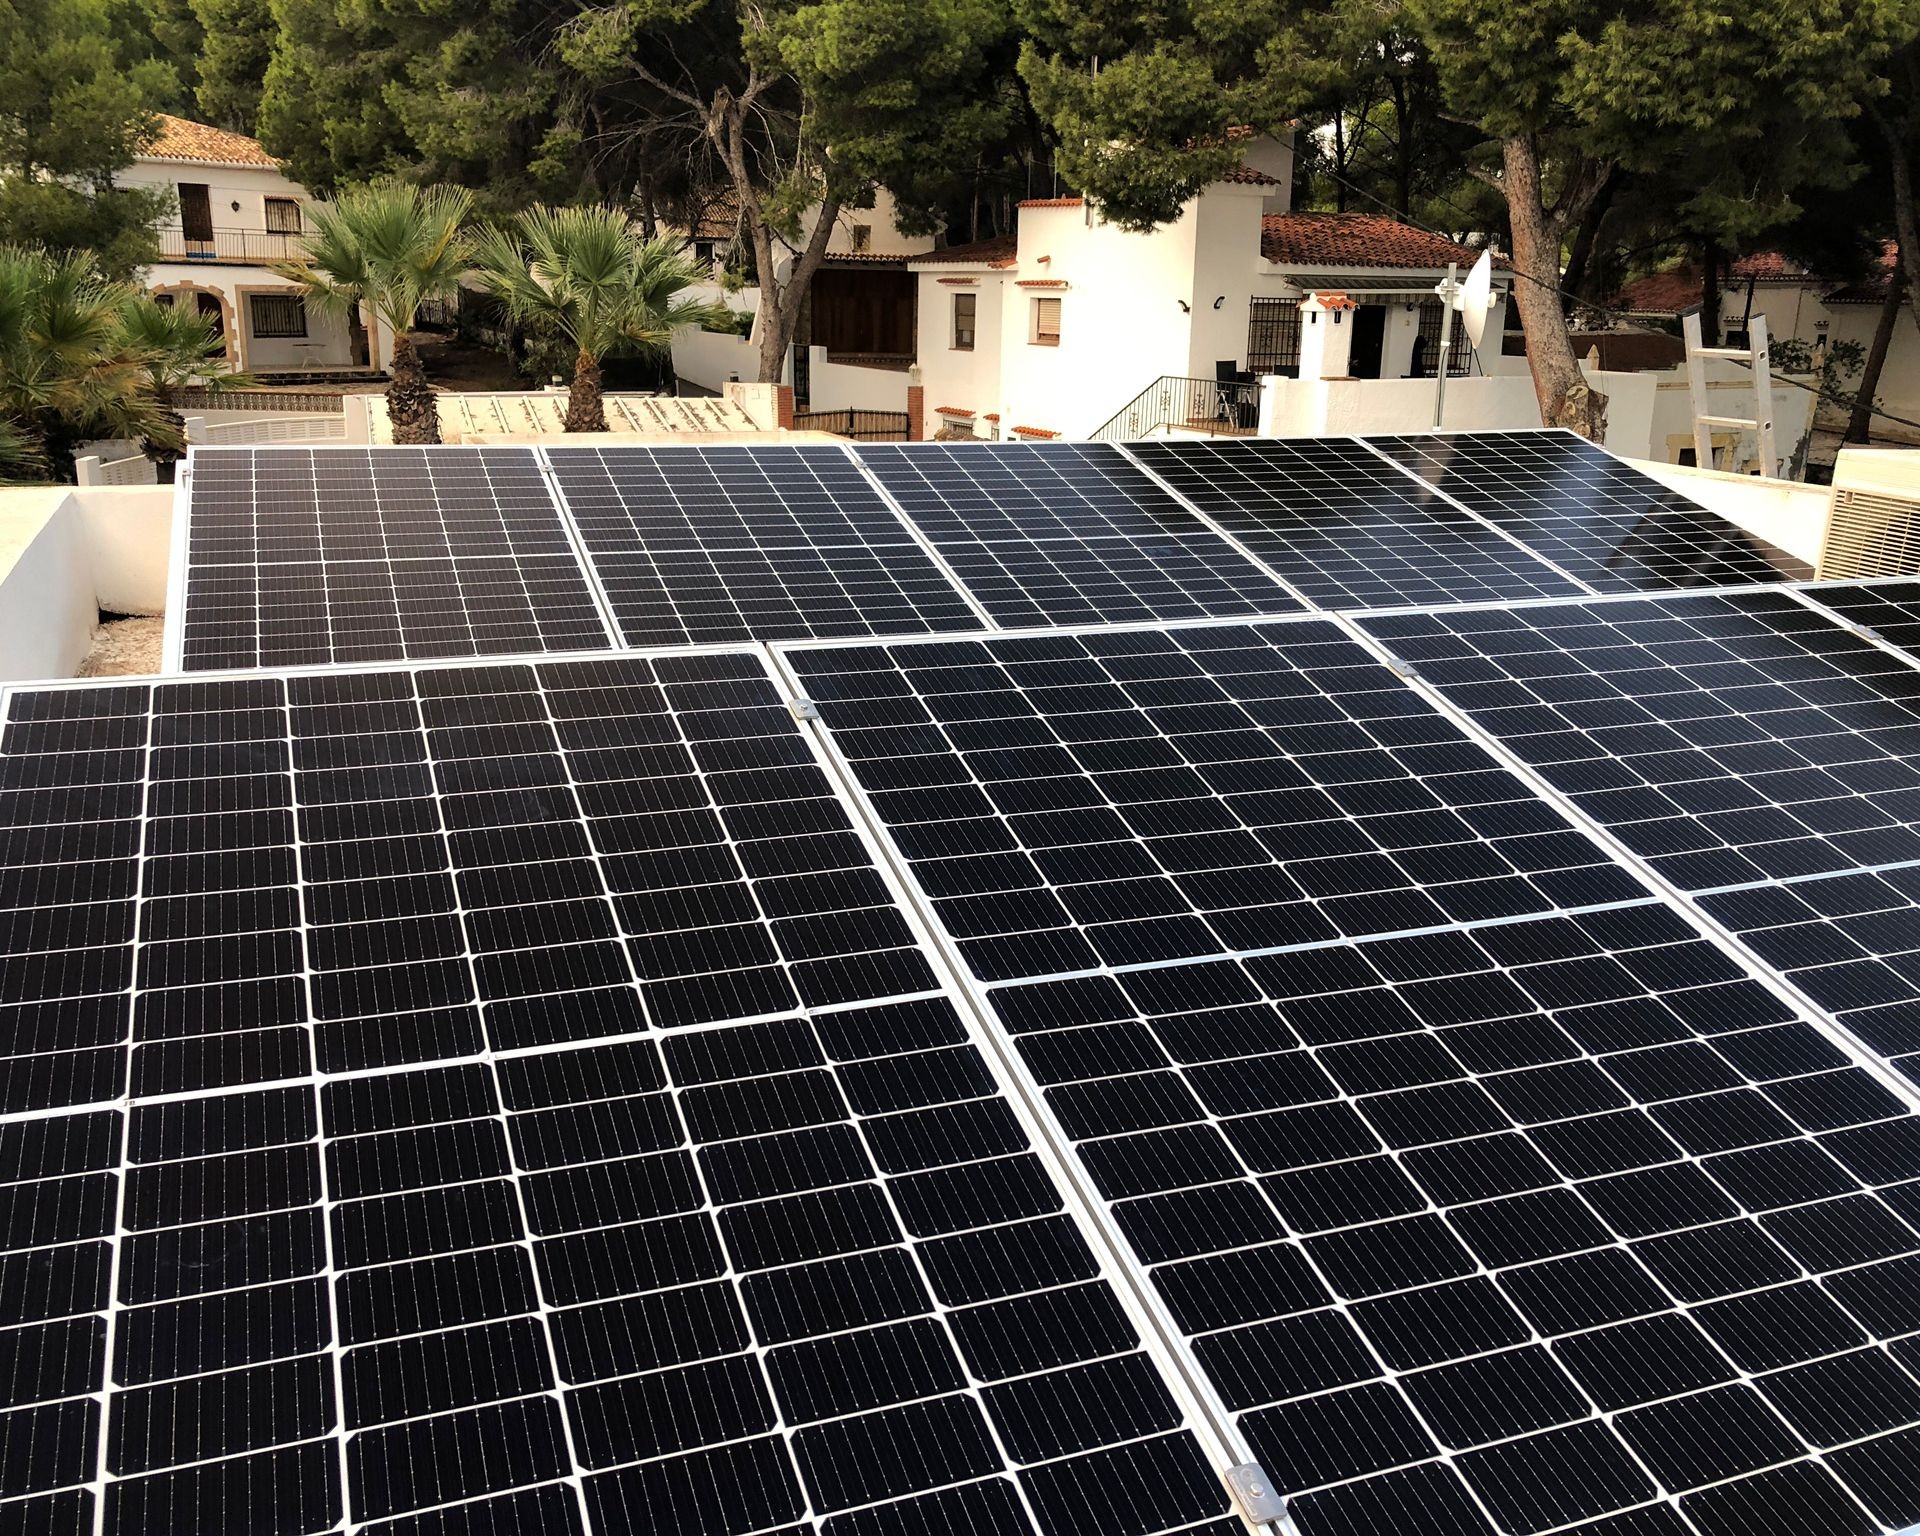 10X 380 wp Solar Panels, Teulada, Alicante (Hybrid system)